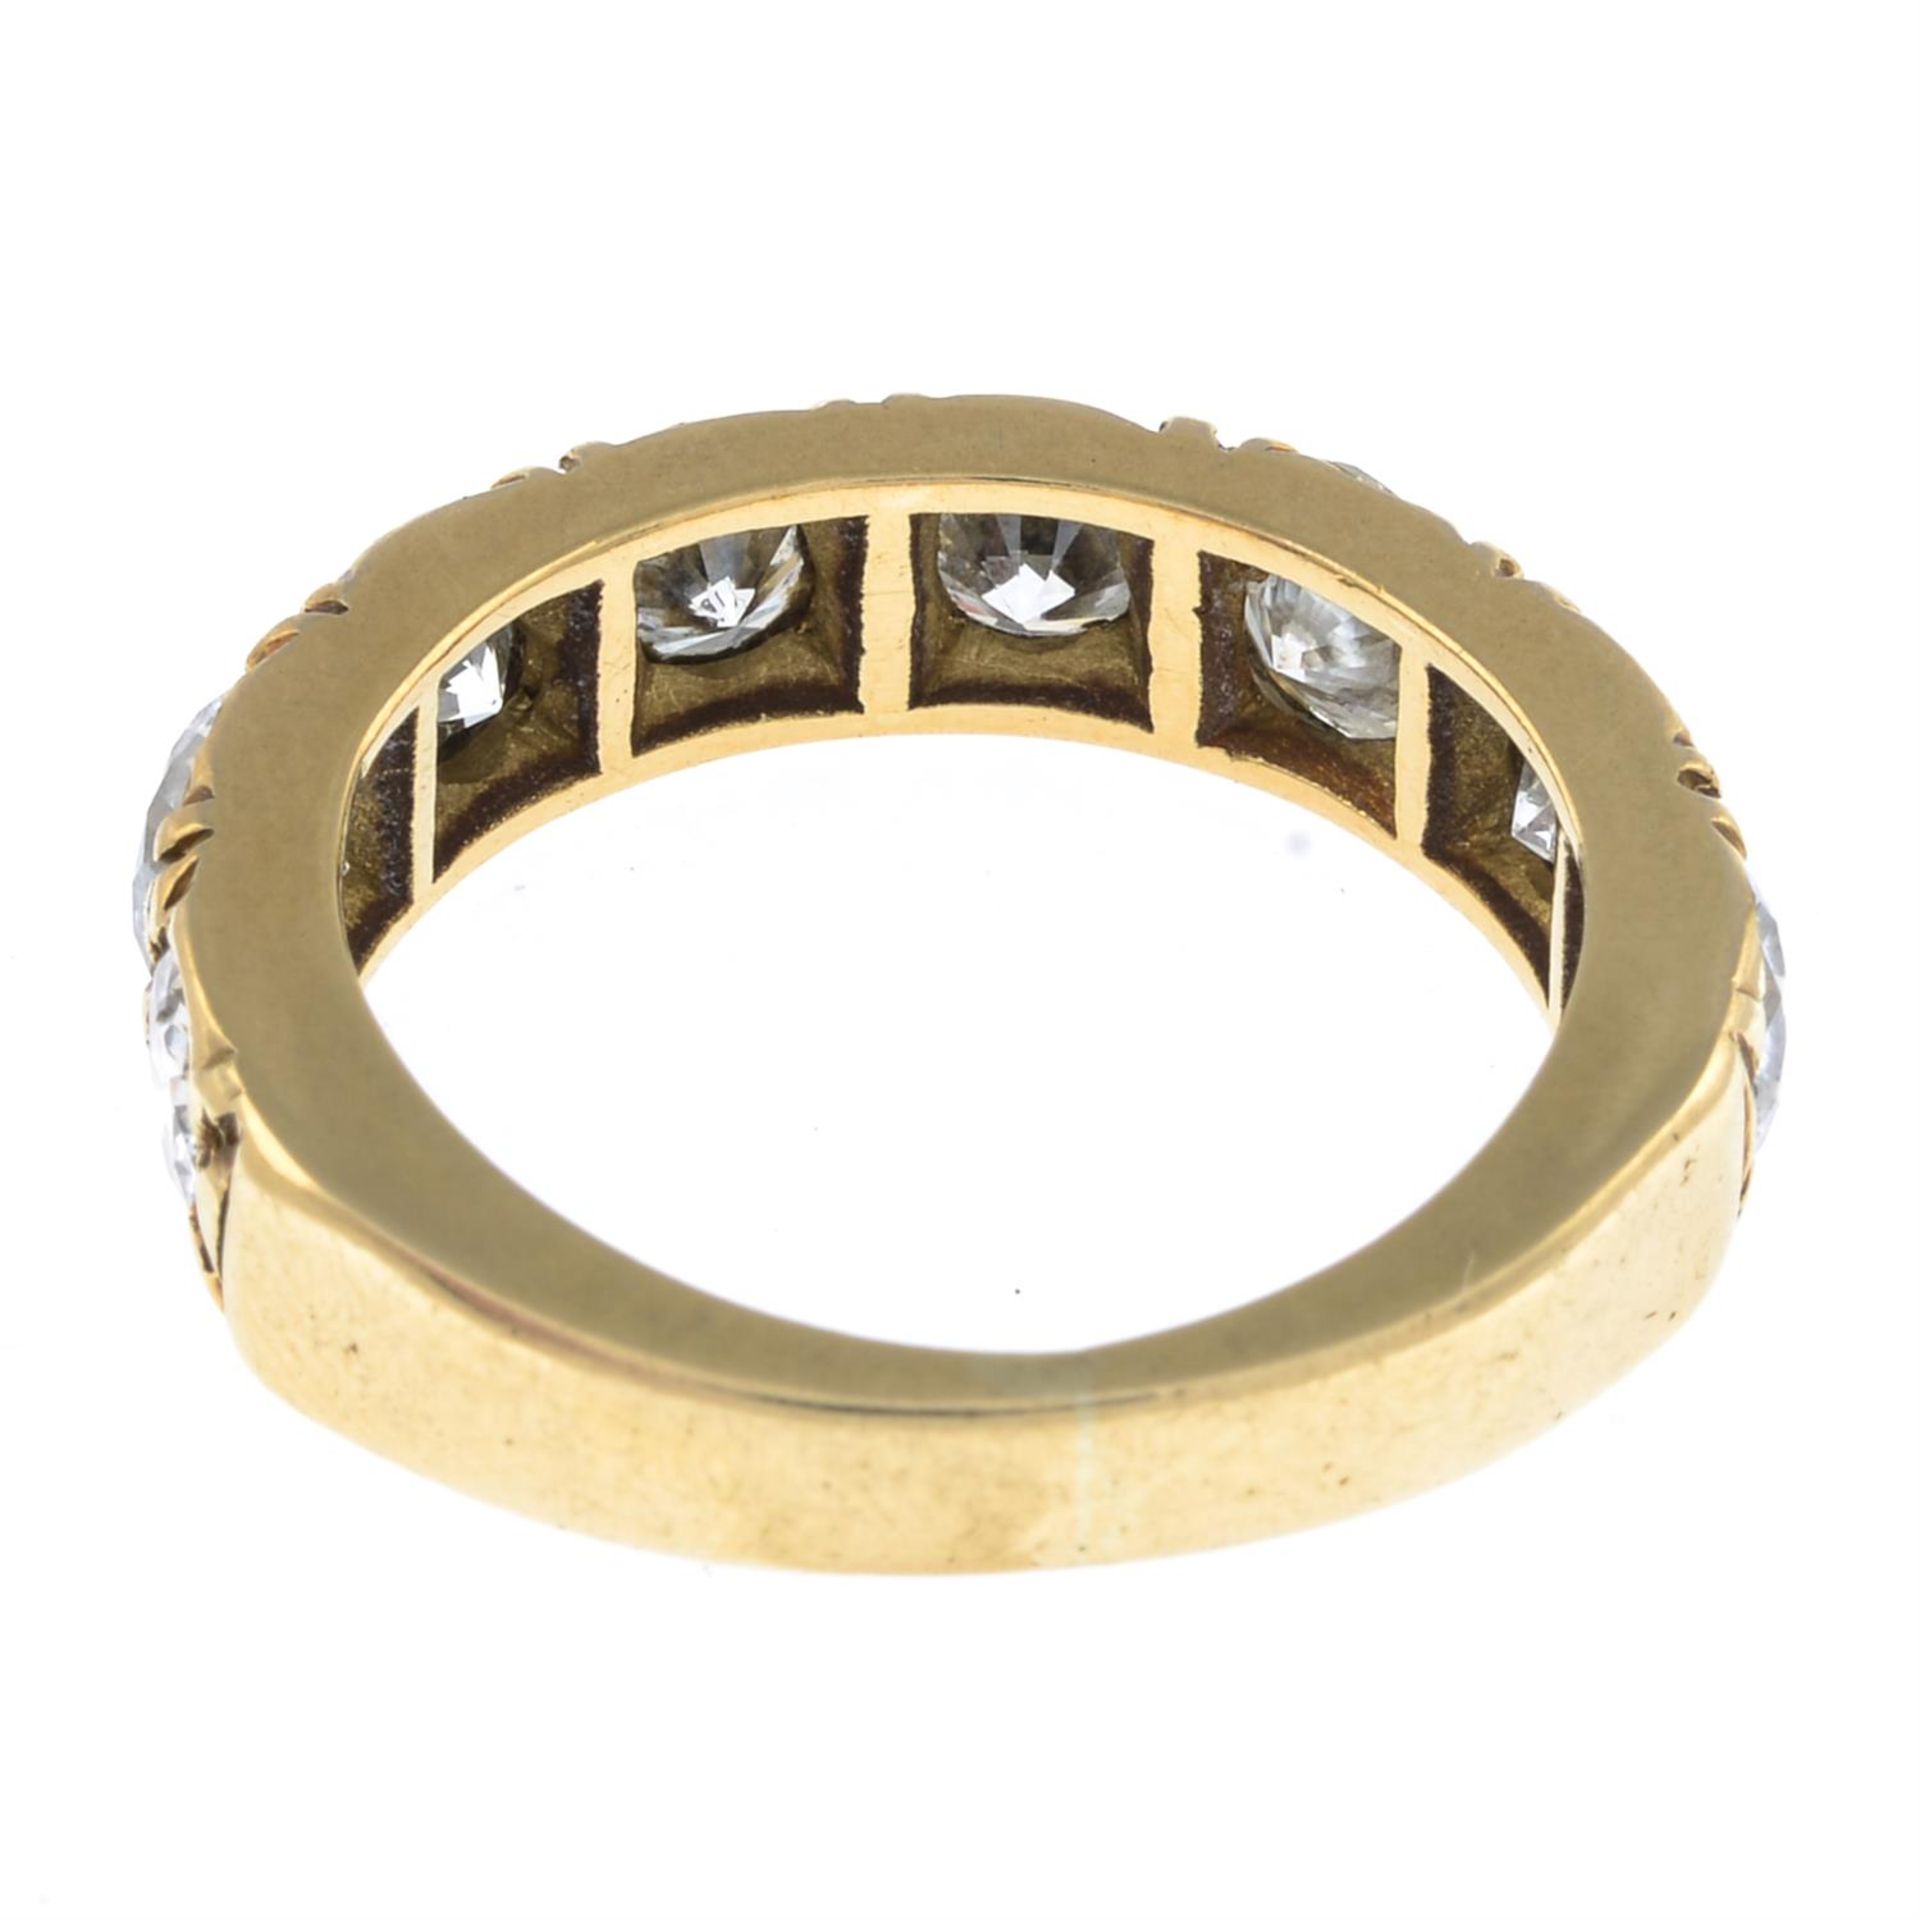 Diamond eternity ring - Image 2 of 2